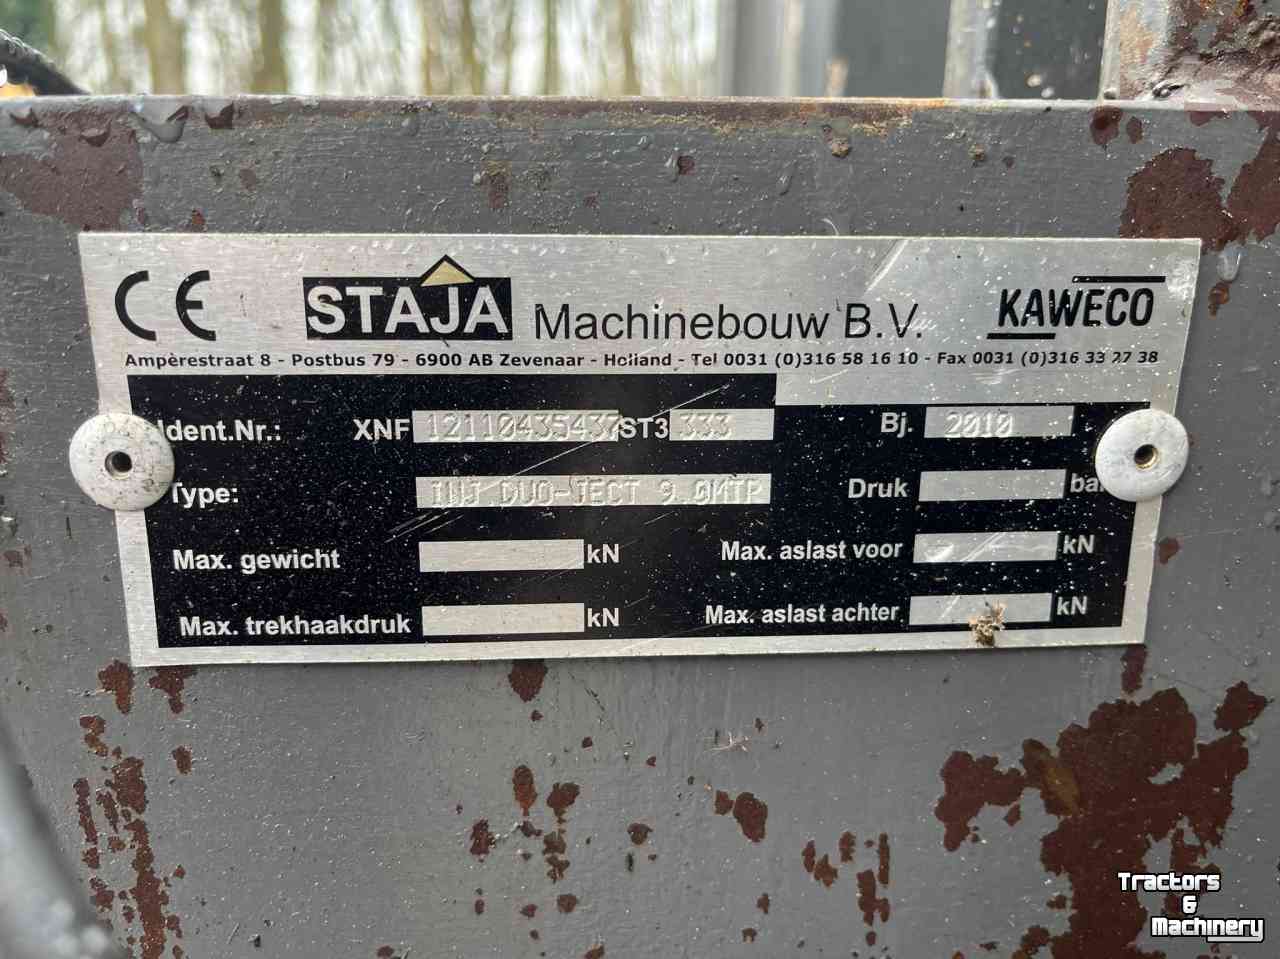 Grünlandinjektor Kaweco Duo-ject 9 meter zodebemester